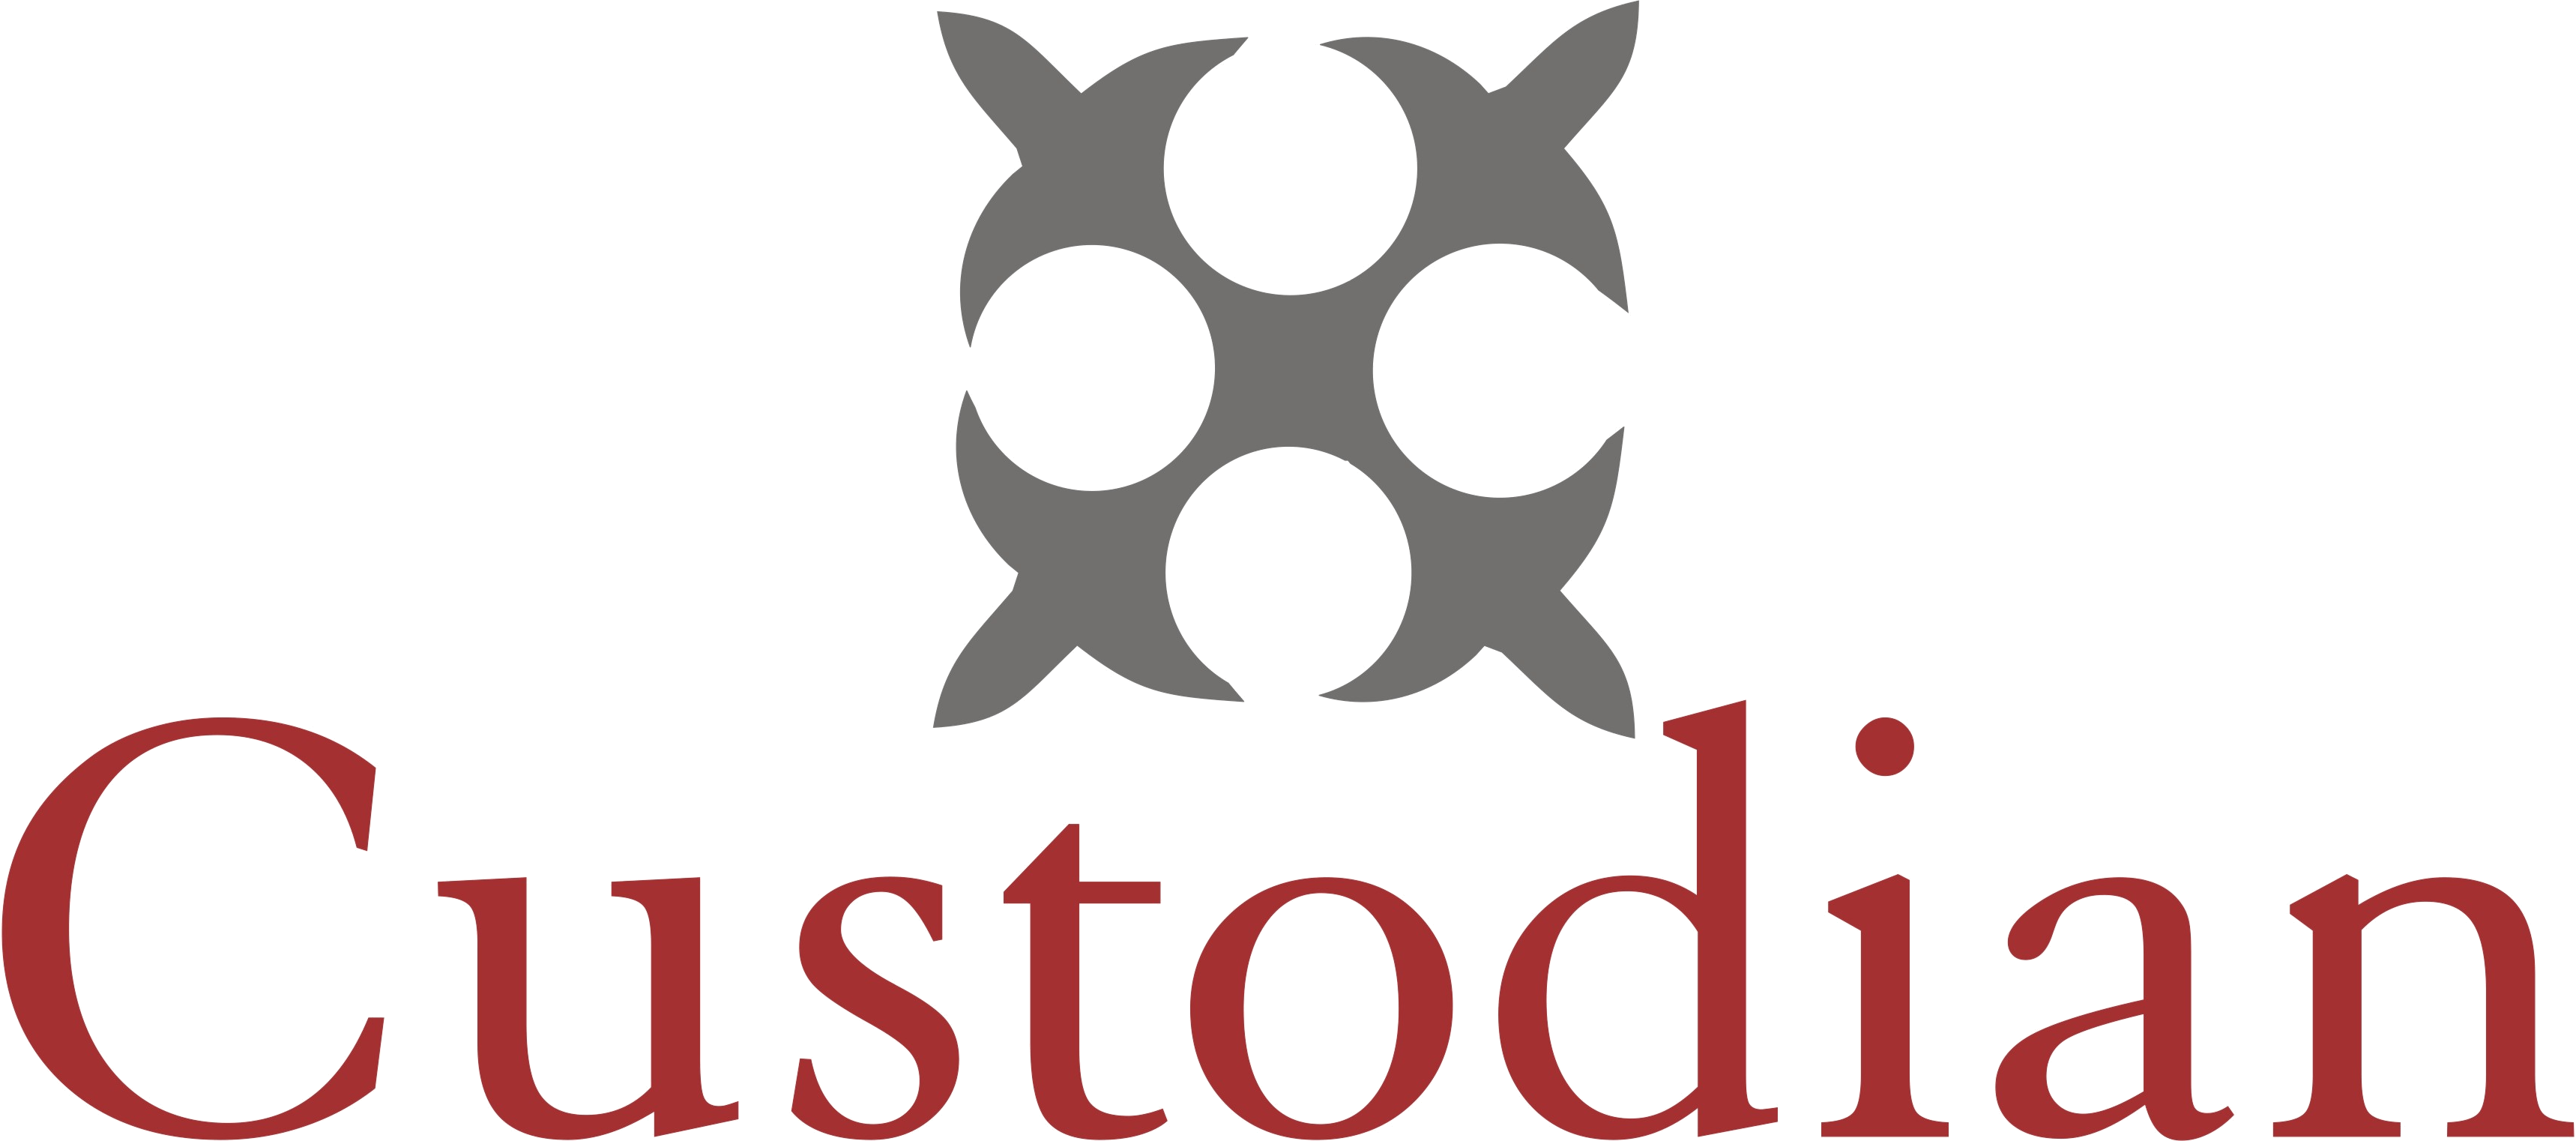 Custodian Logo - Vehicle Insurance :: Third Party Insurance - Custodian and Allied ...